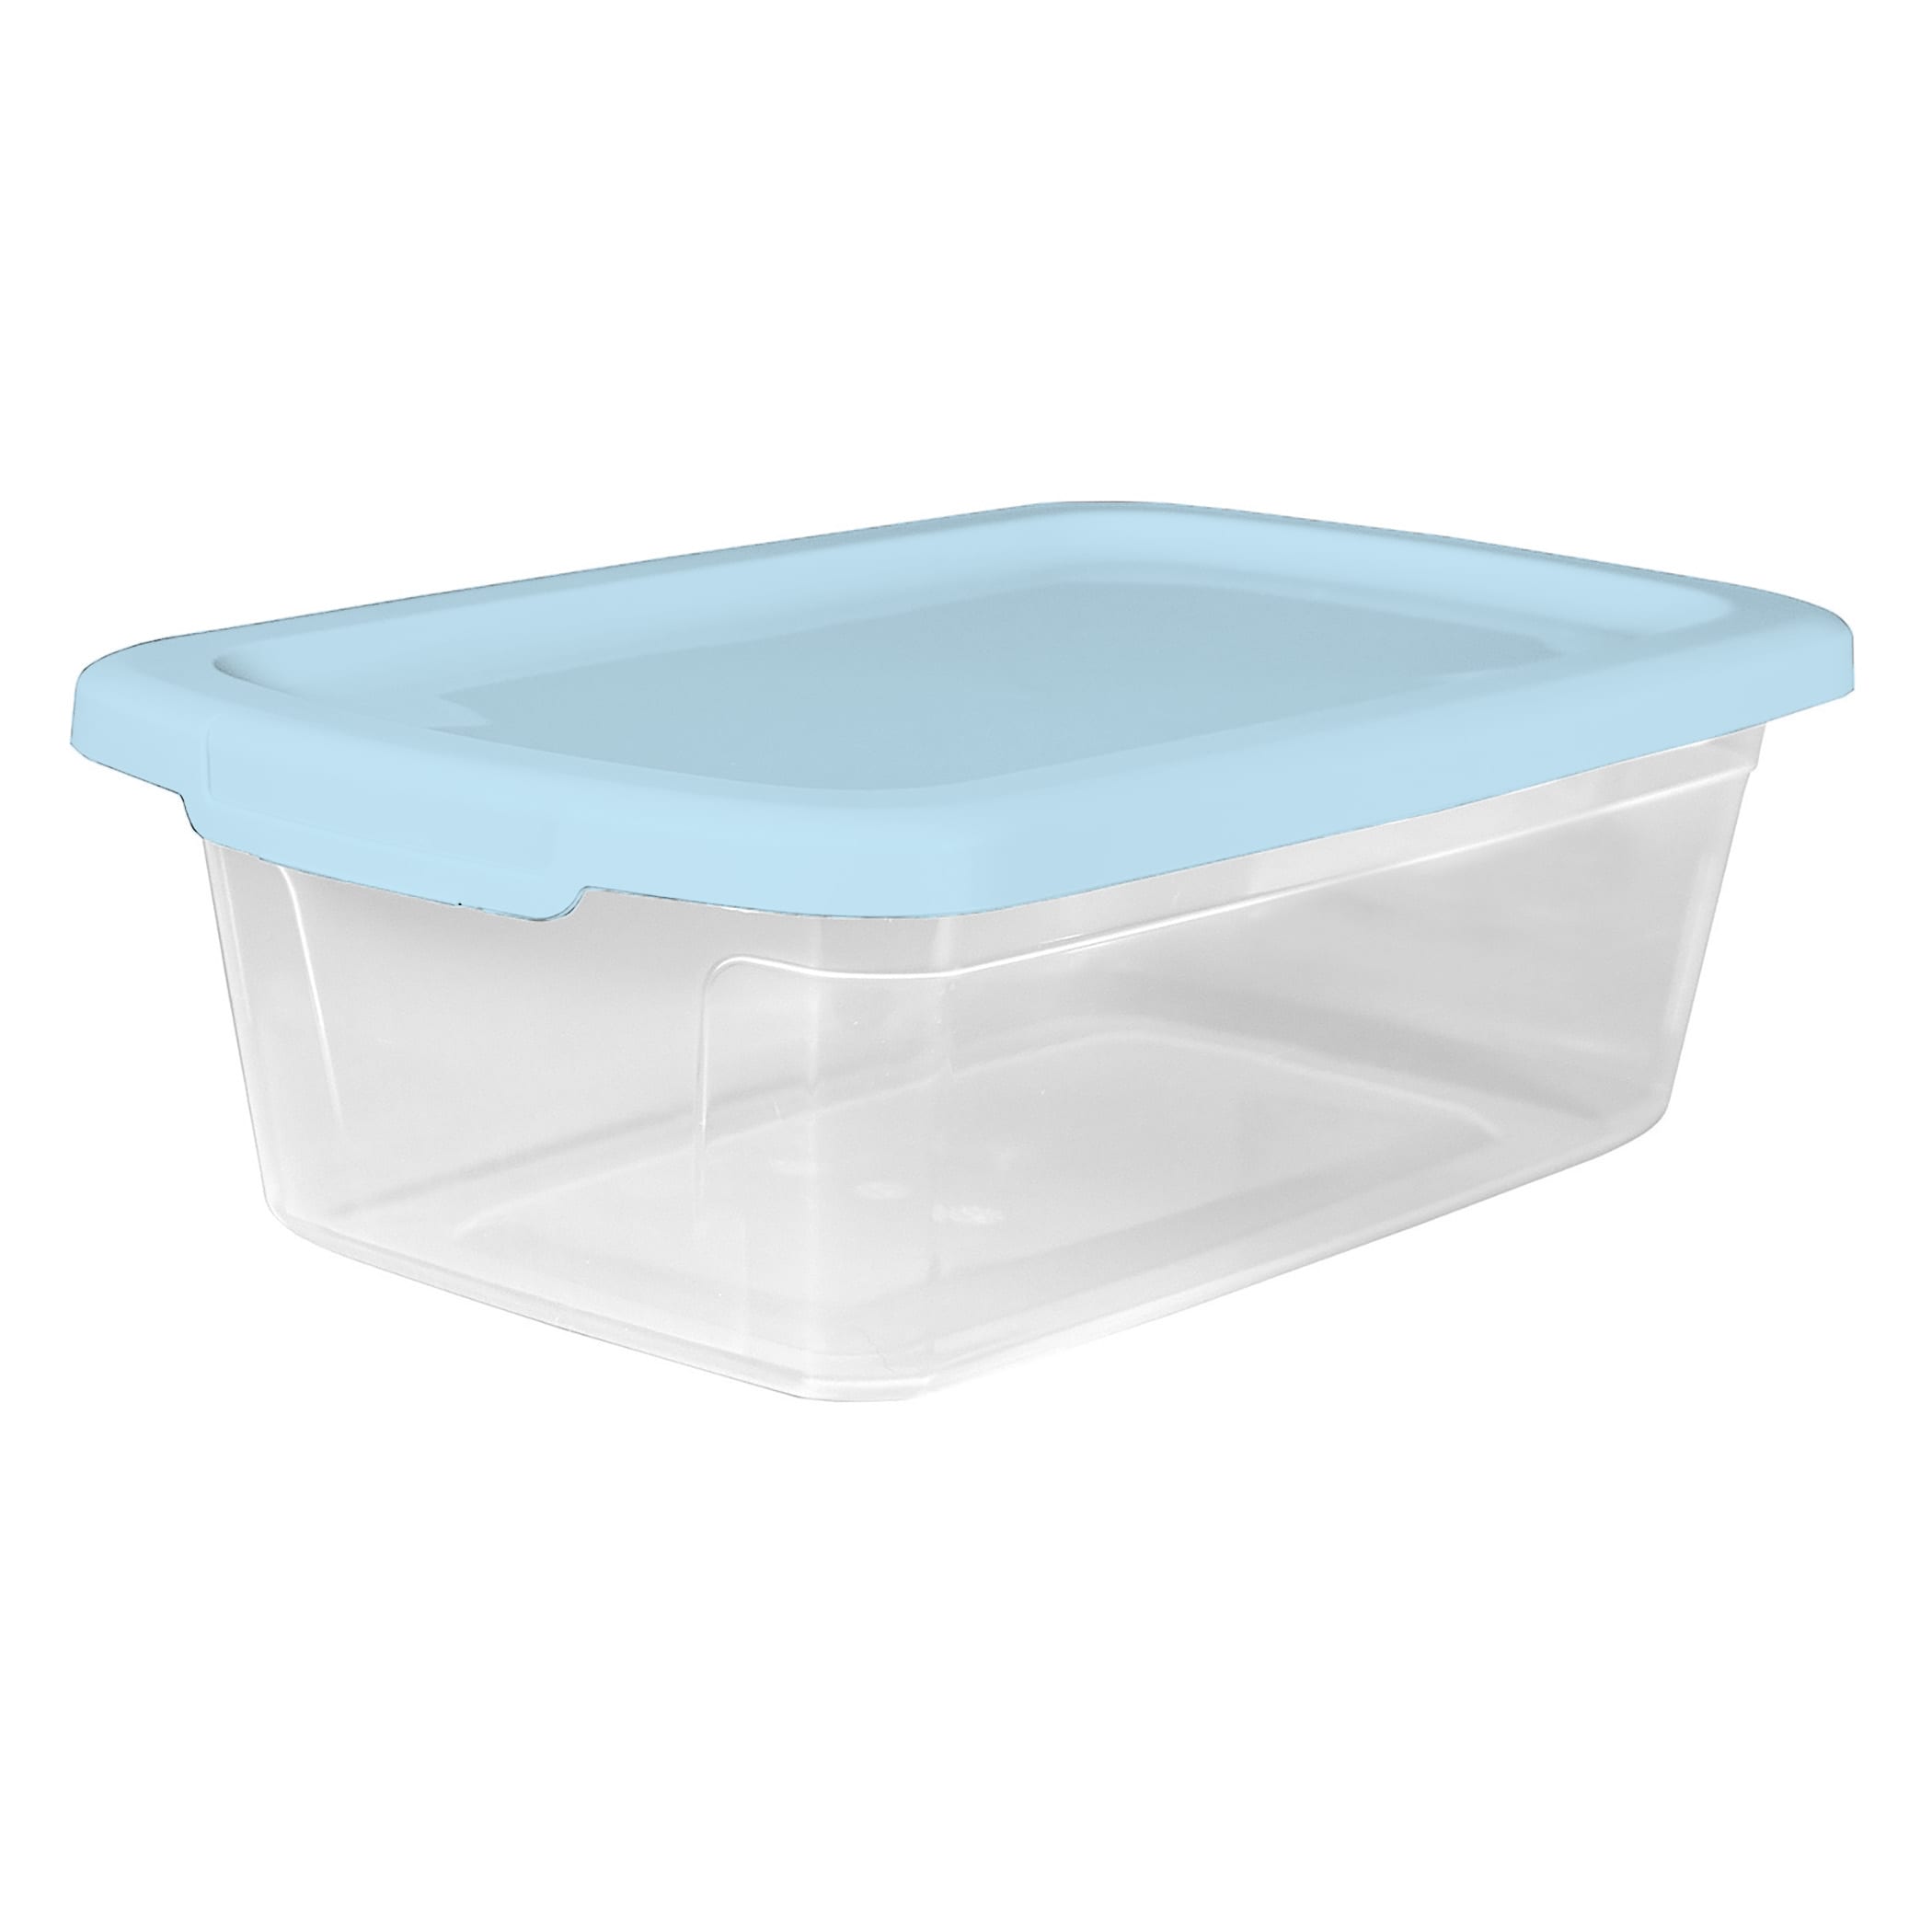  Hefty Hi-Rise Clear Plastic Bin with Smoke Blue Lid (8